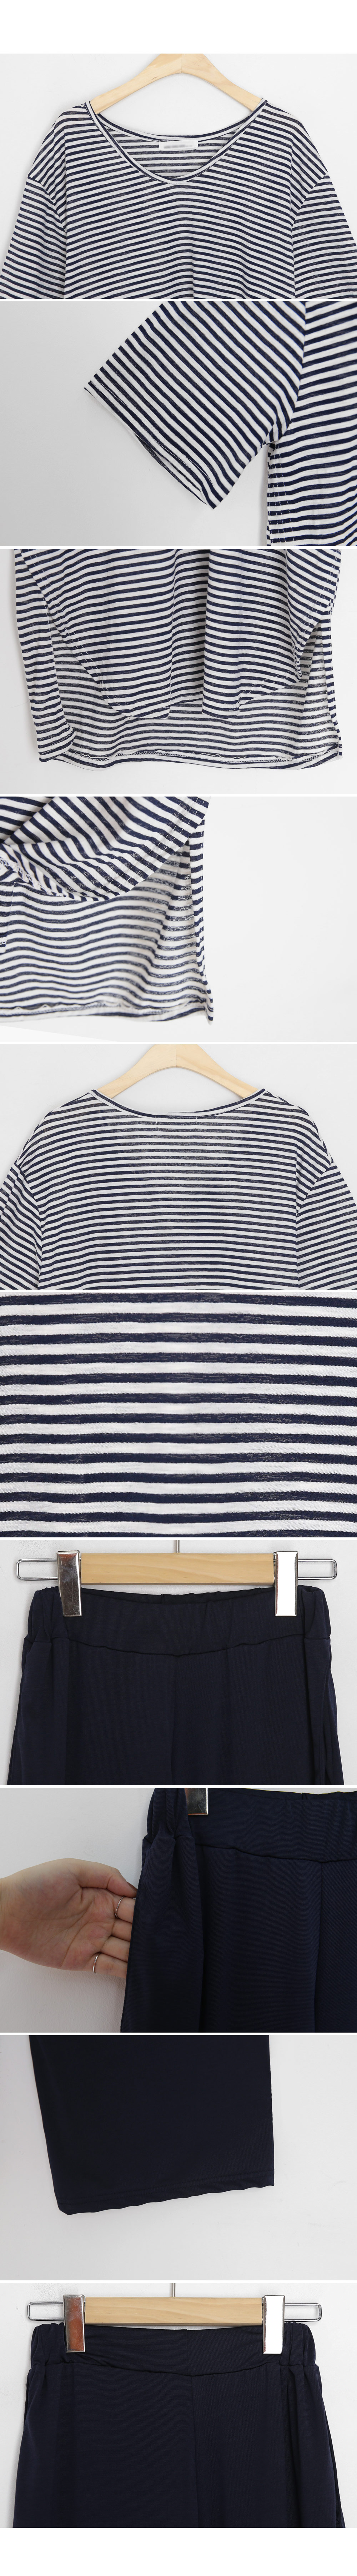 UネックボーダーTシャツ&ワイドパンツSET・全2色 | DHOLIC | 詳細画像5